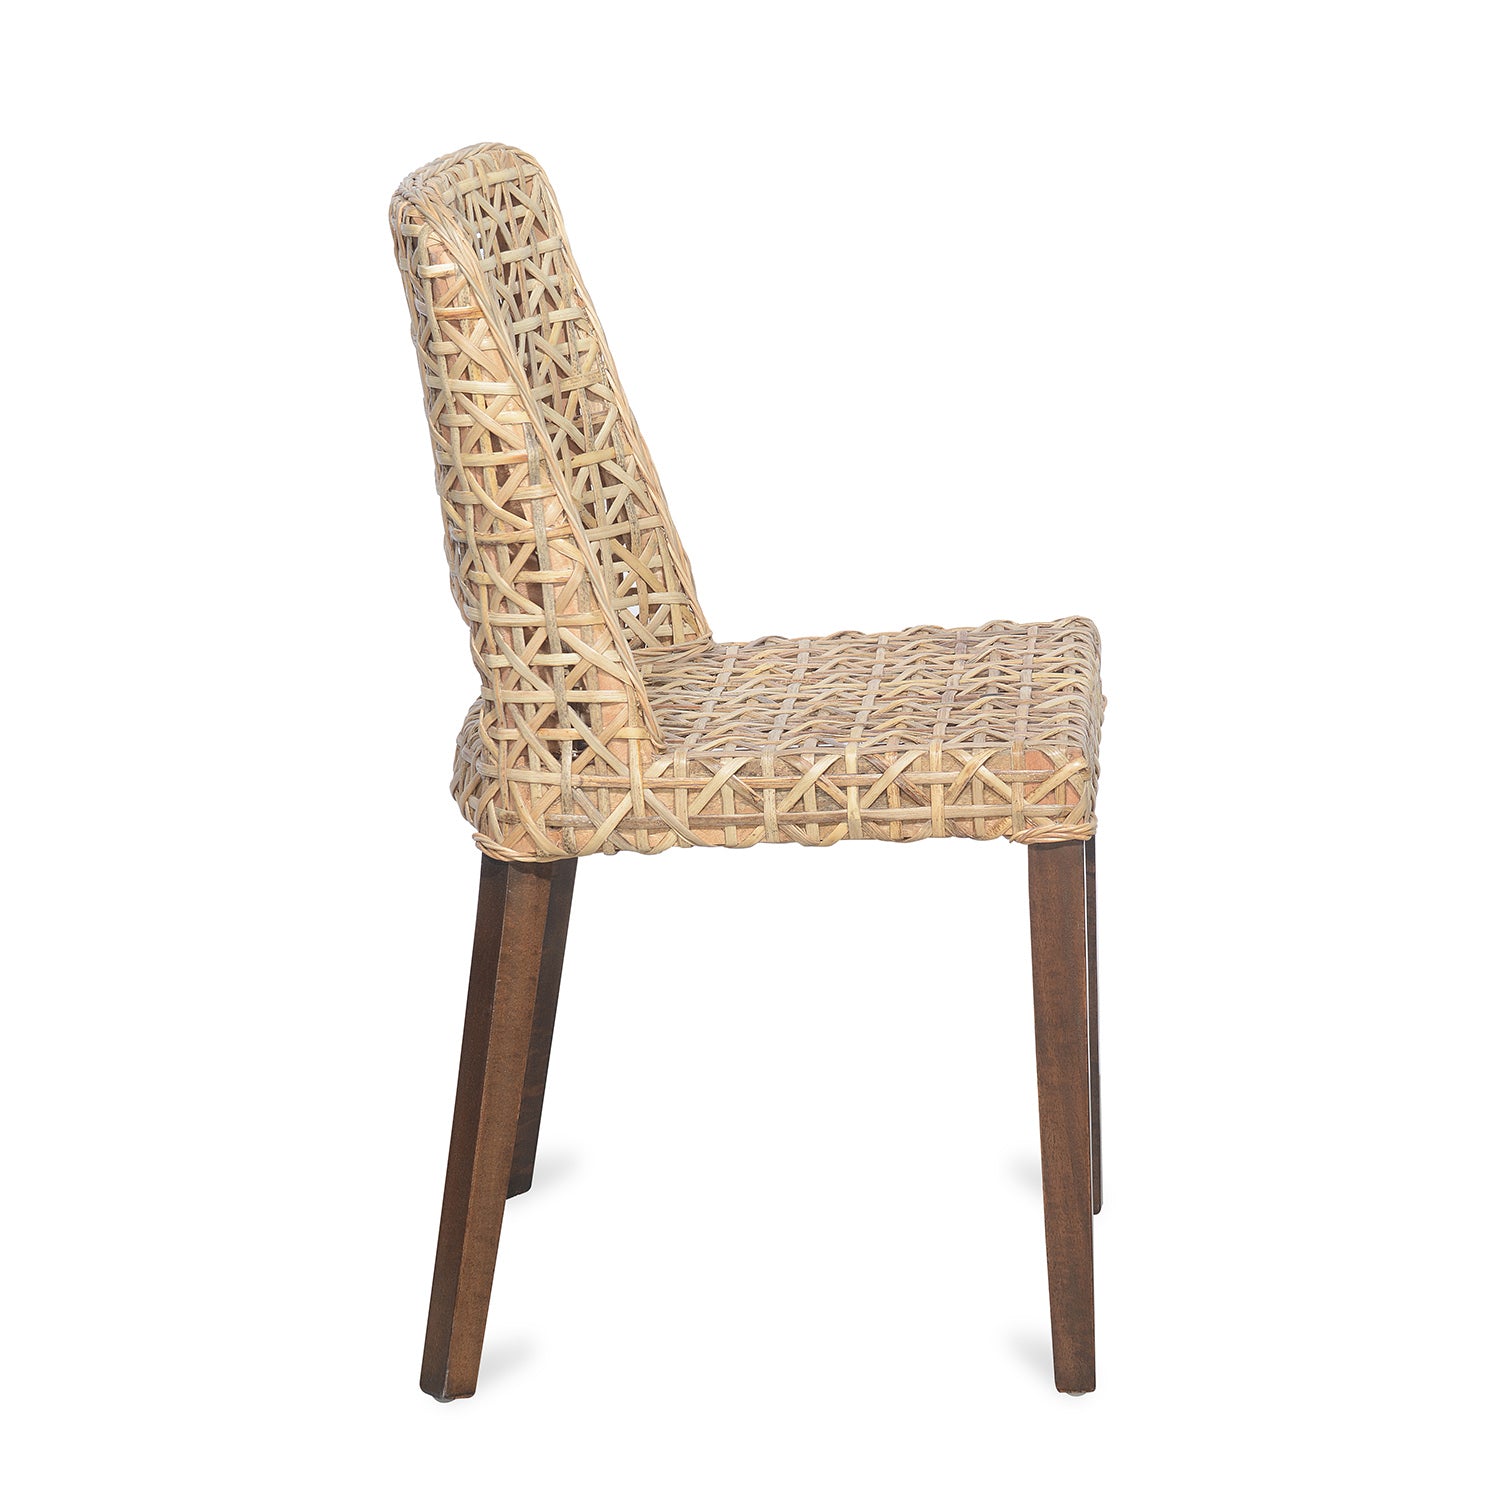 Mahi Occassional Chair (Beige)